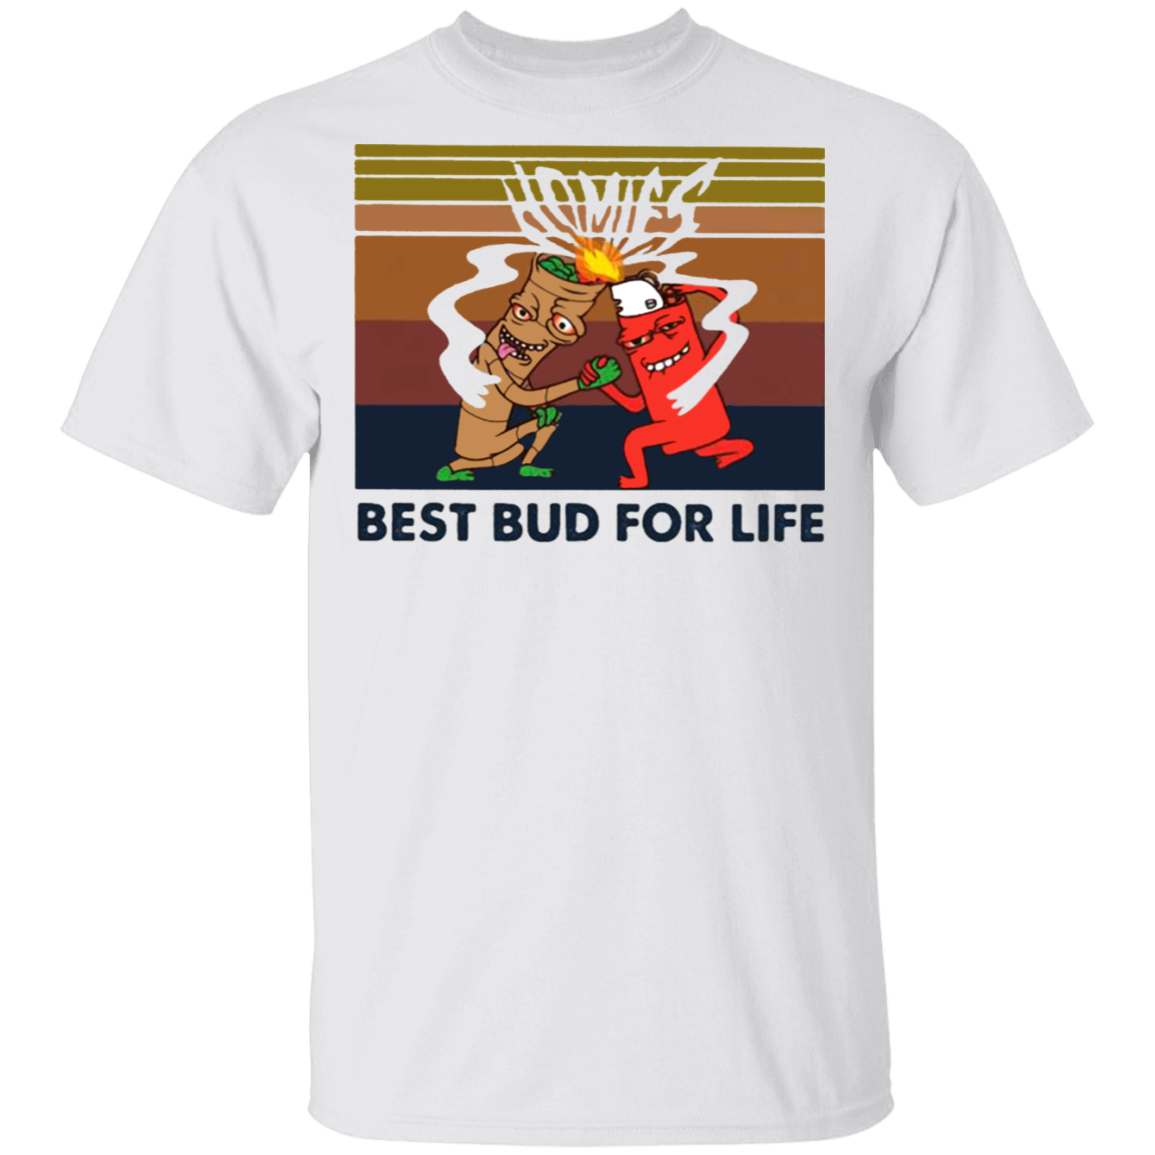 Best Buds Shirt Best Buds Weed Shirt Funny For Men Women TEENIDI Store